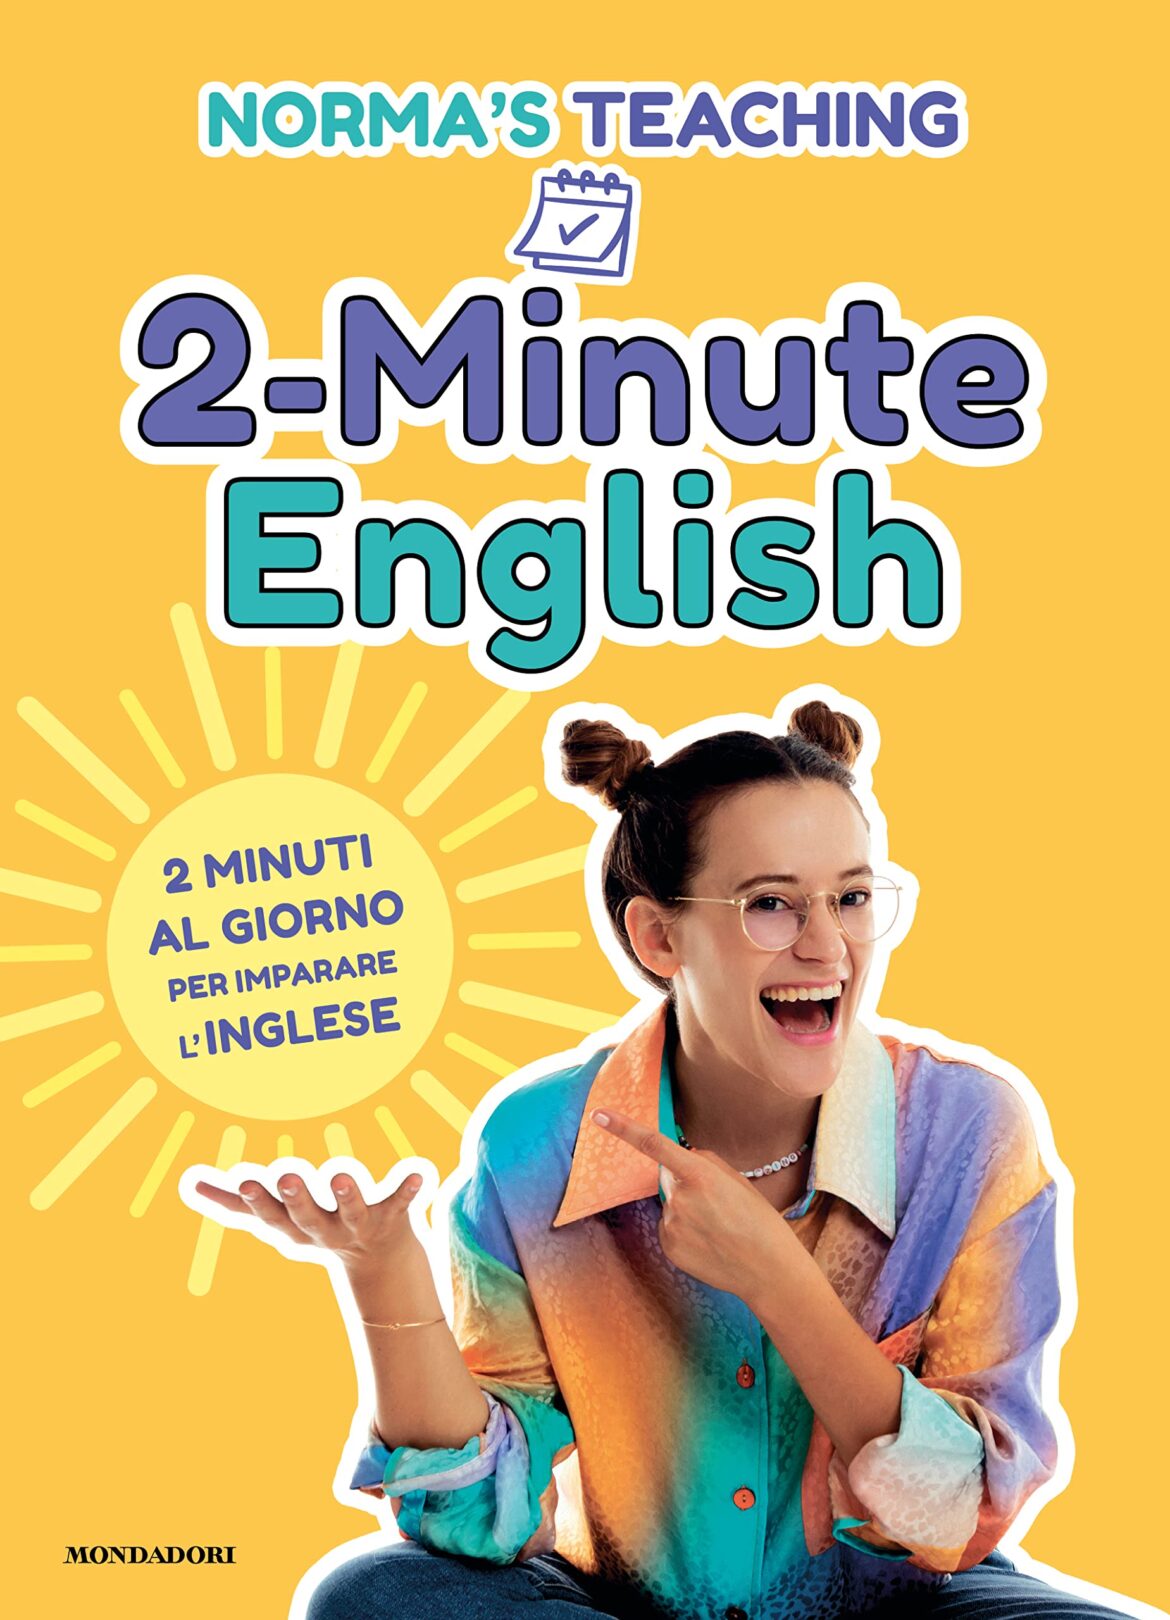 2-Minute English di Norma’s Teaching – Recensione